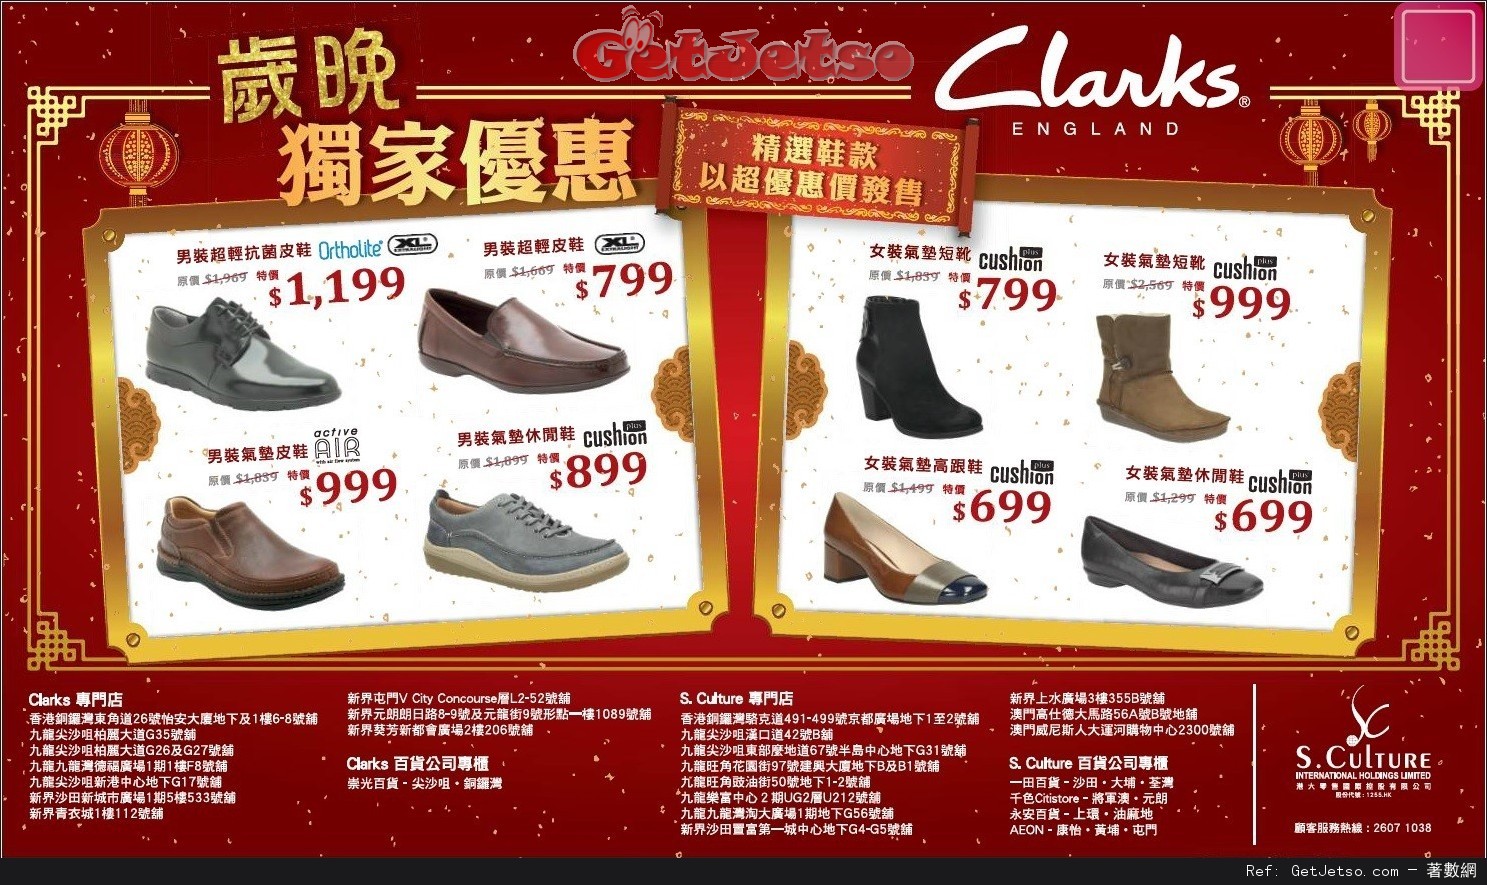 Clarks 精選鞋款歲晚獨家優惠(至16年2月7日)圖片1